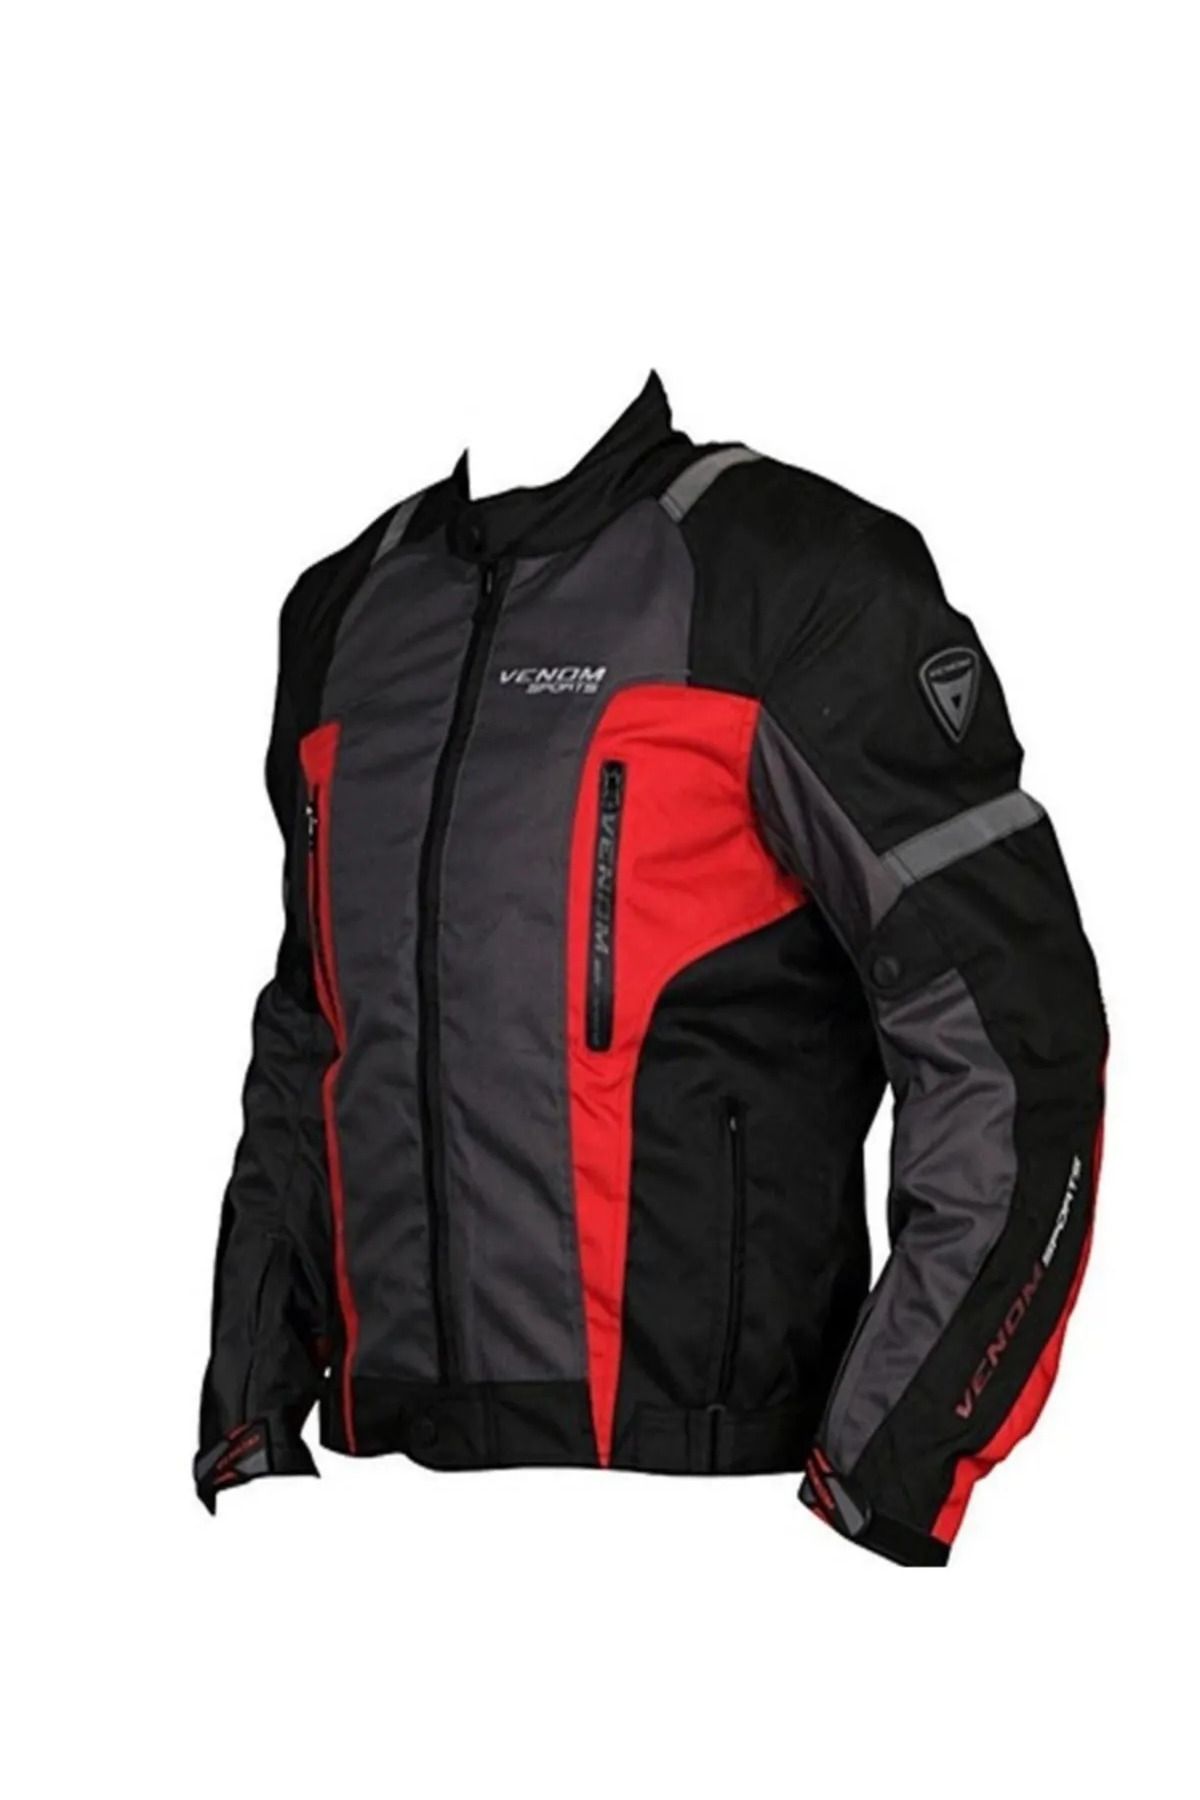 Venom Air Racing Motorcu Ceketi 4 Mevsim Kırmızı Siyah Mont